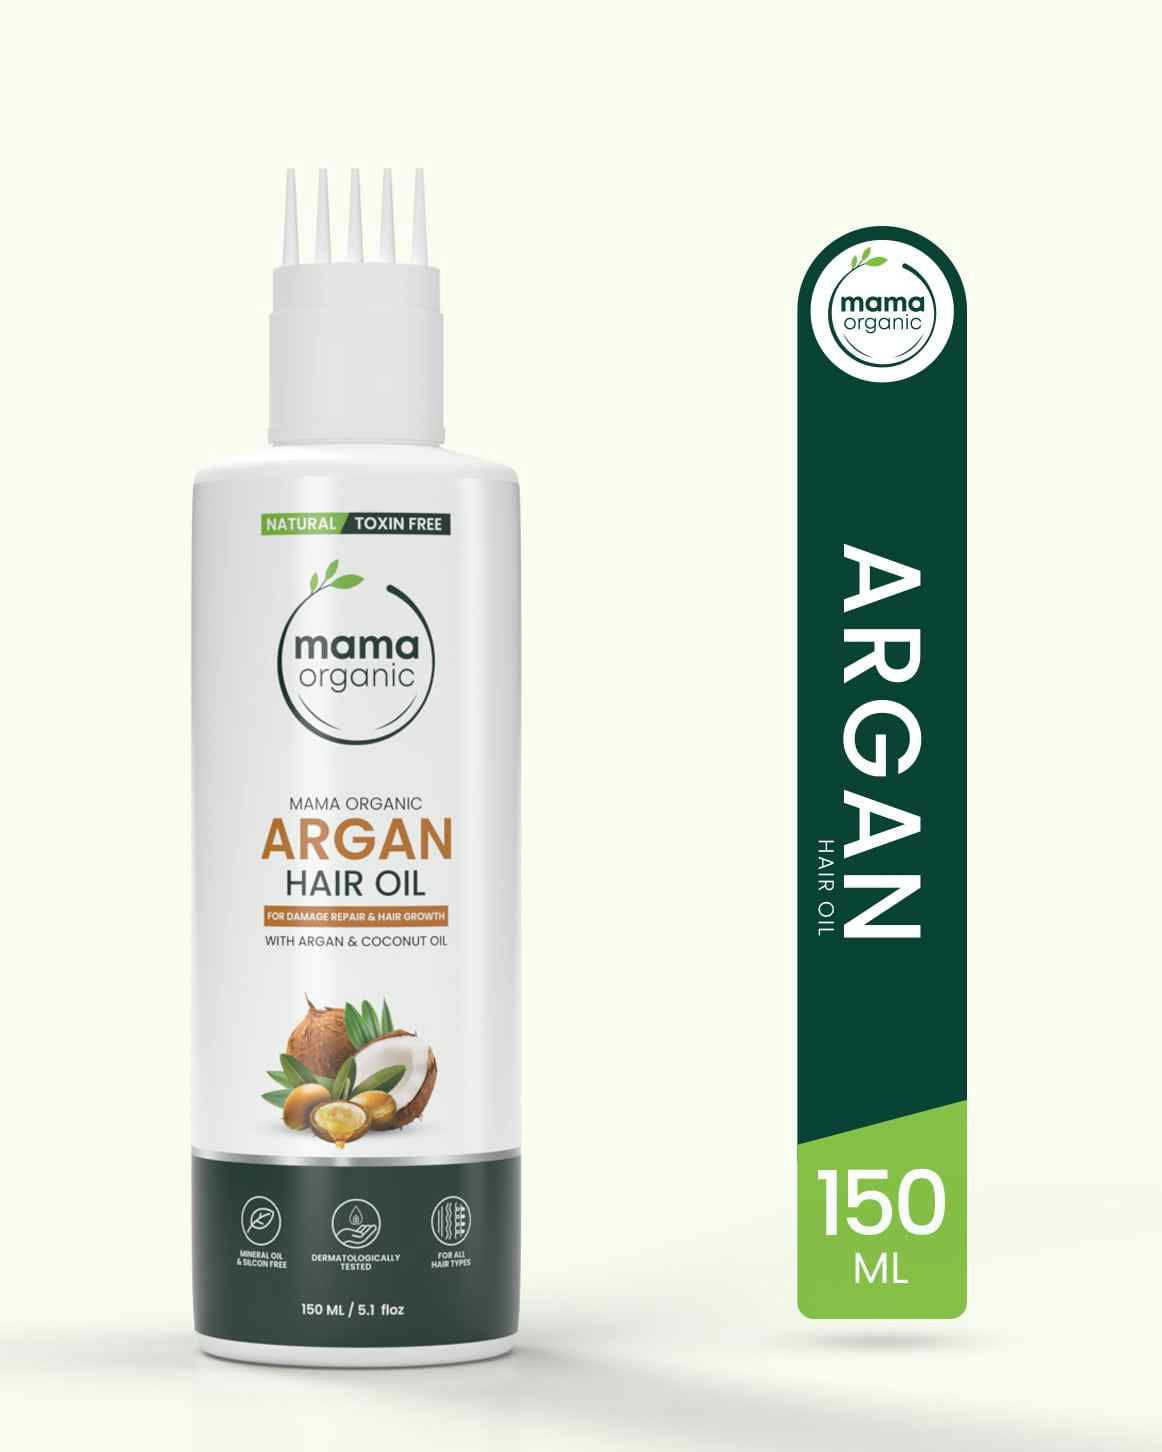 Mama Organic Argan Hair Oil For Damage Repair & Hair Growth | For Women & Girls | Natural & Toxin-Free - 150ml